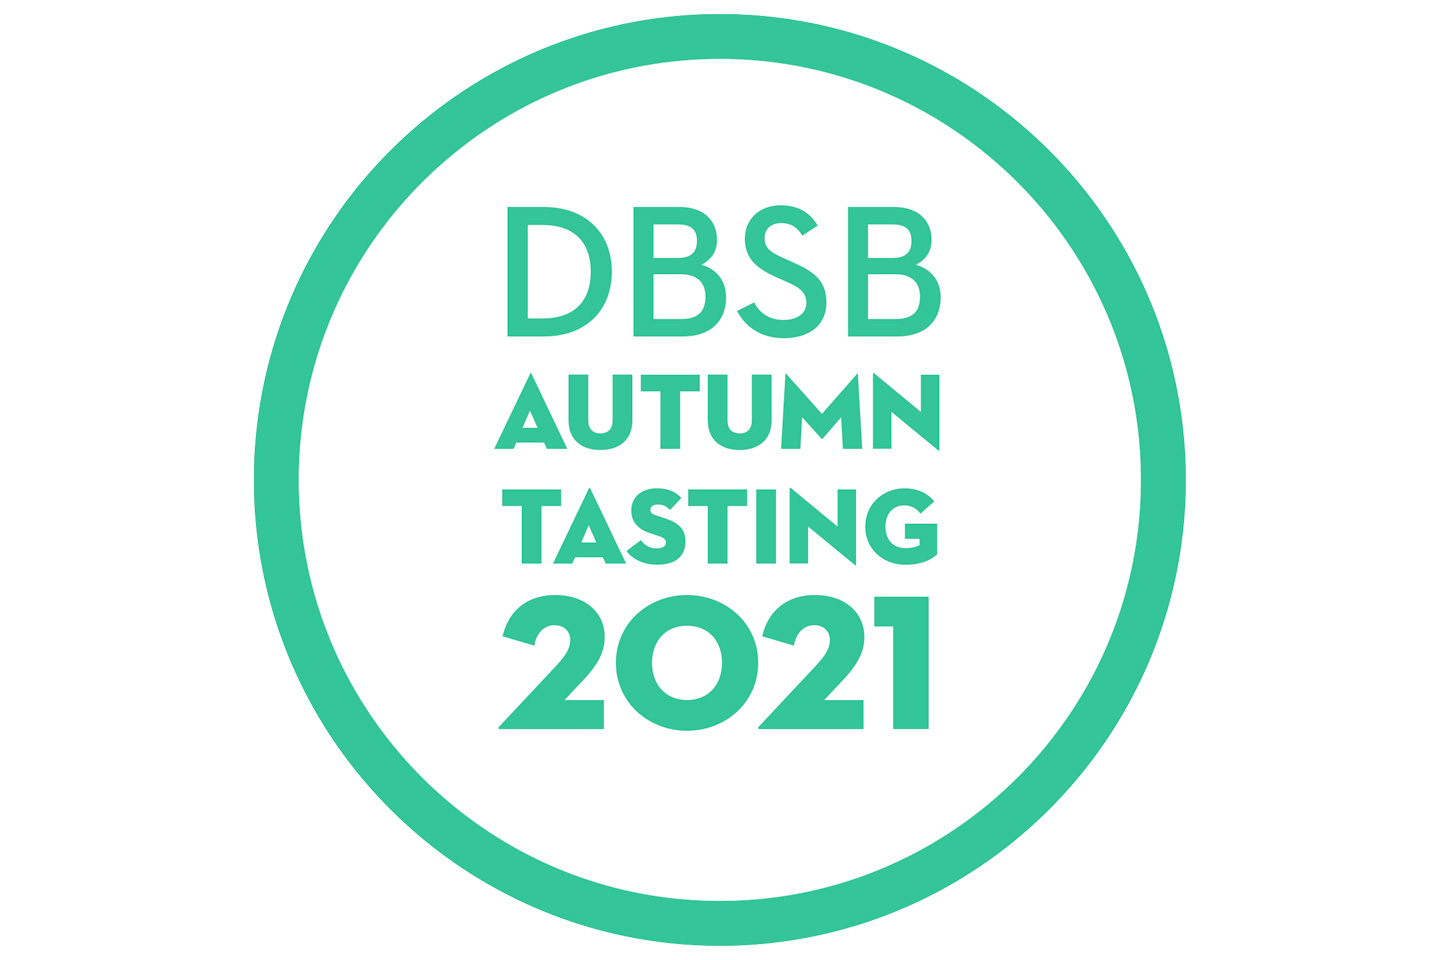 The DB & SB Autumn Blind Tasting 2022